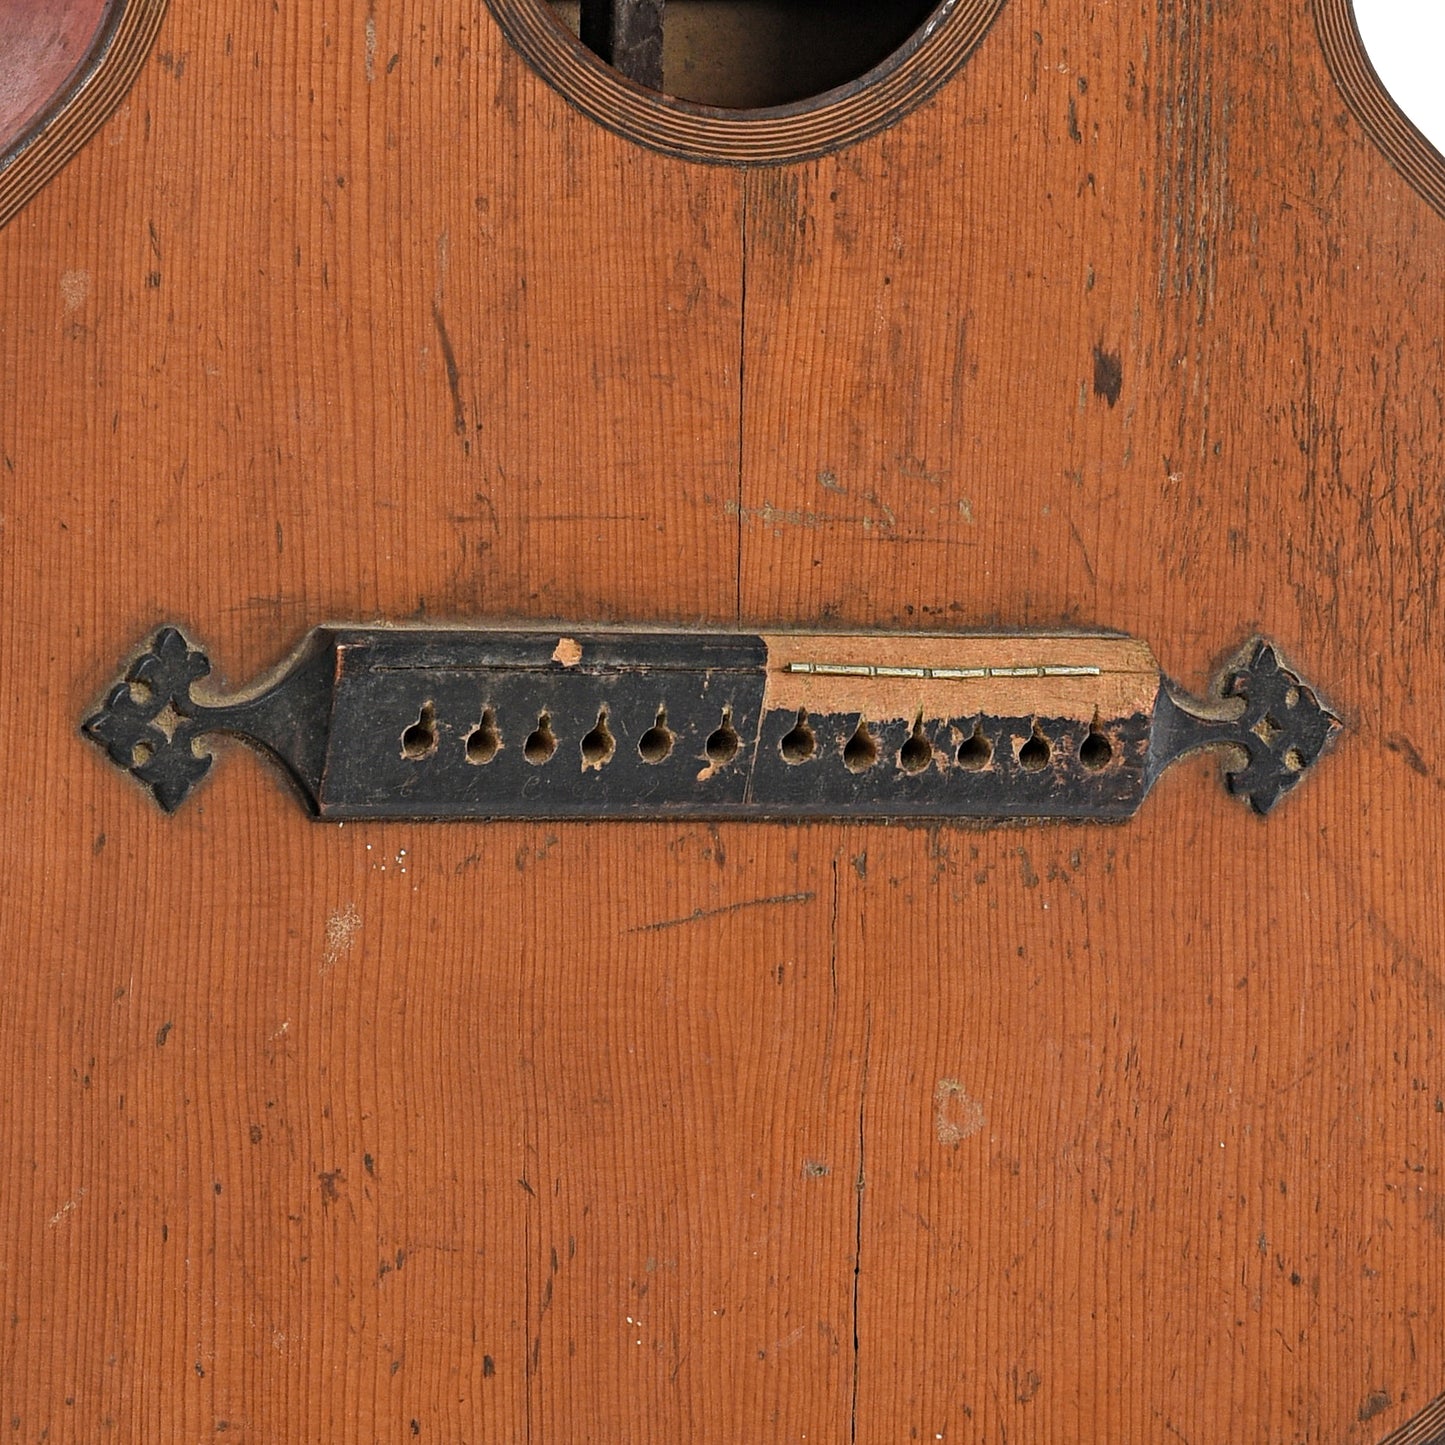 Bridge of Unknown Maker Vienna Style Contra Guitar (1870s?)